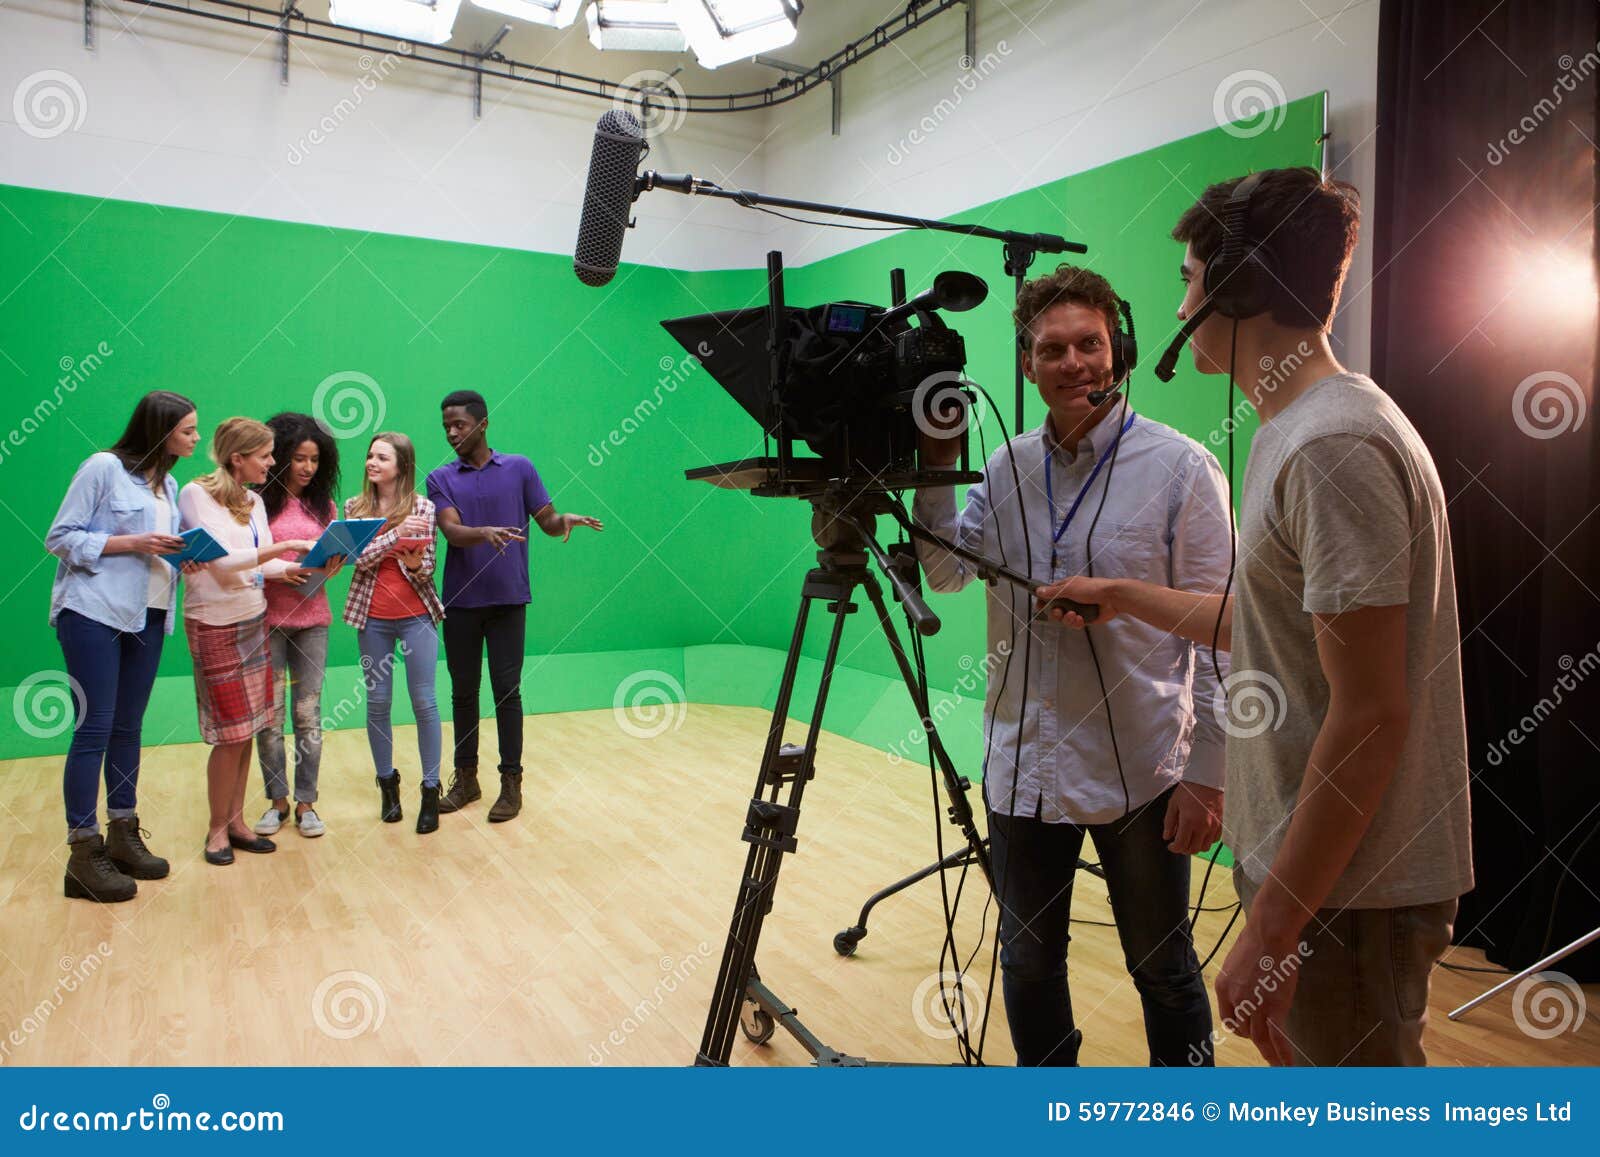 students on media studies course in tv studio